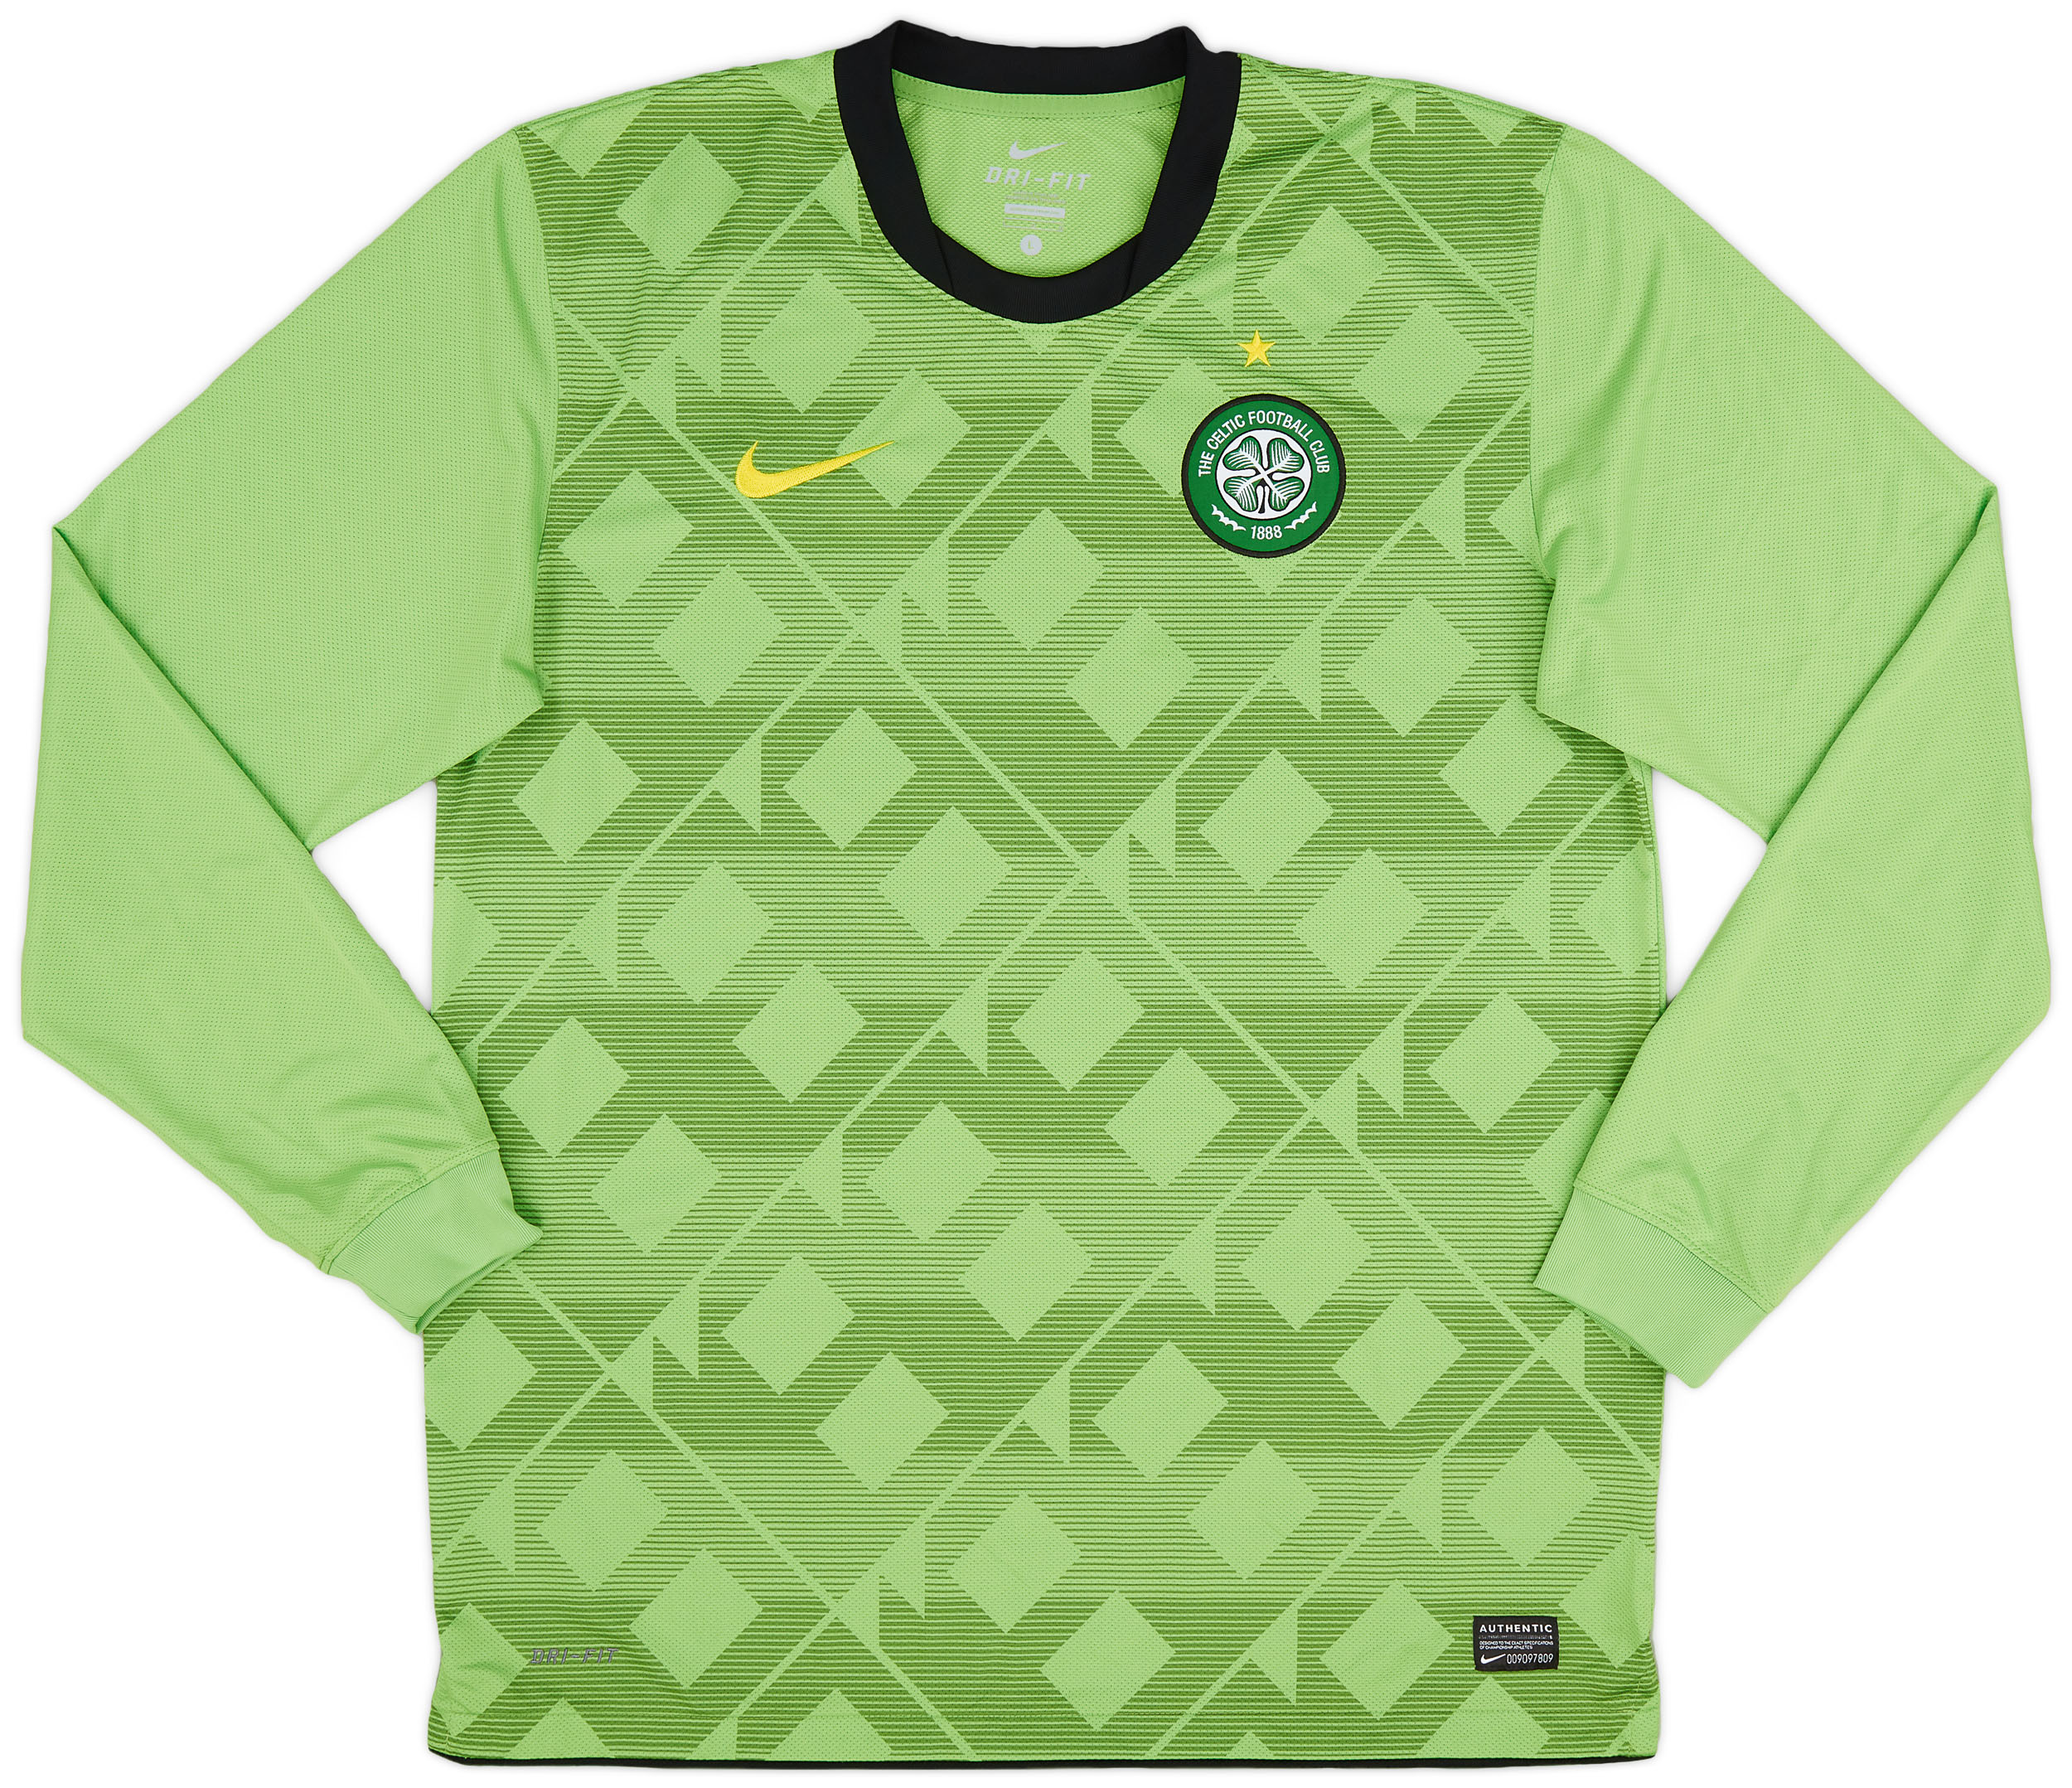 2010-11 Celtic Away Shirt - 9/10 - ()